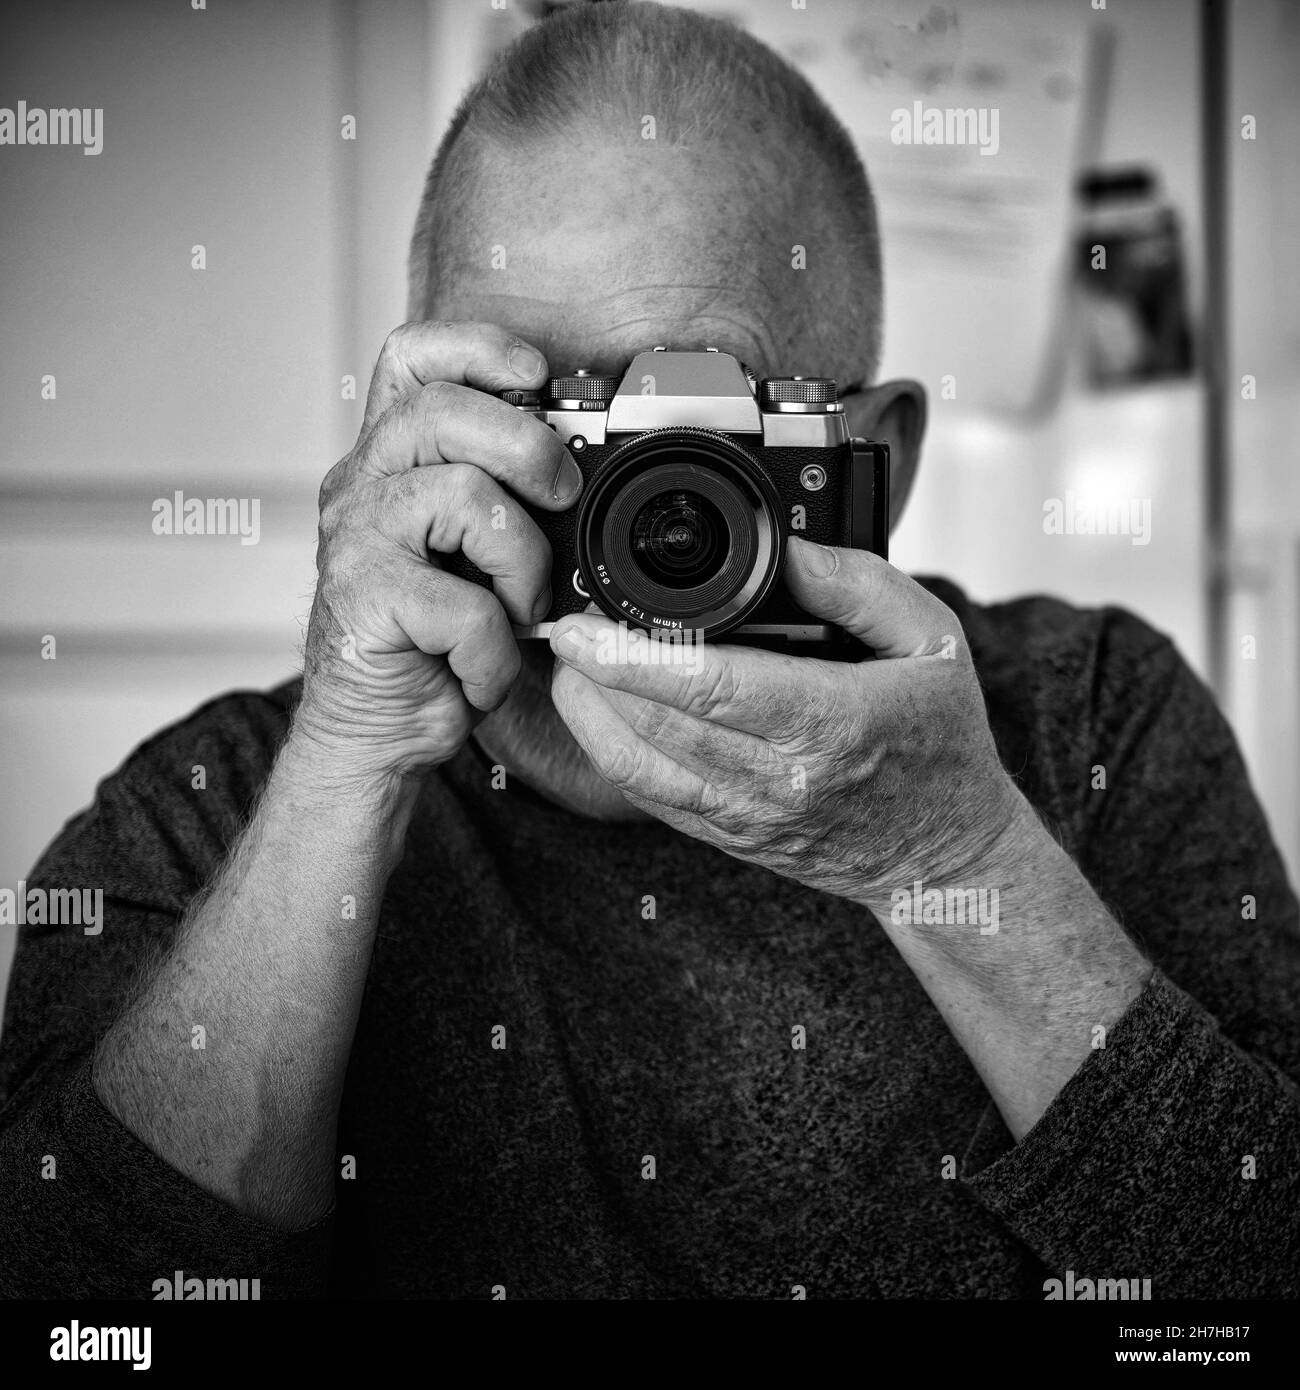 Elderly man taking photo with his digital camera Stock Photo